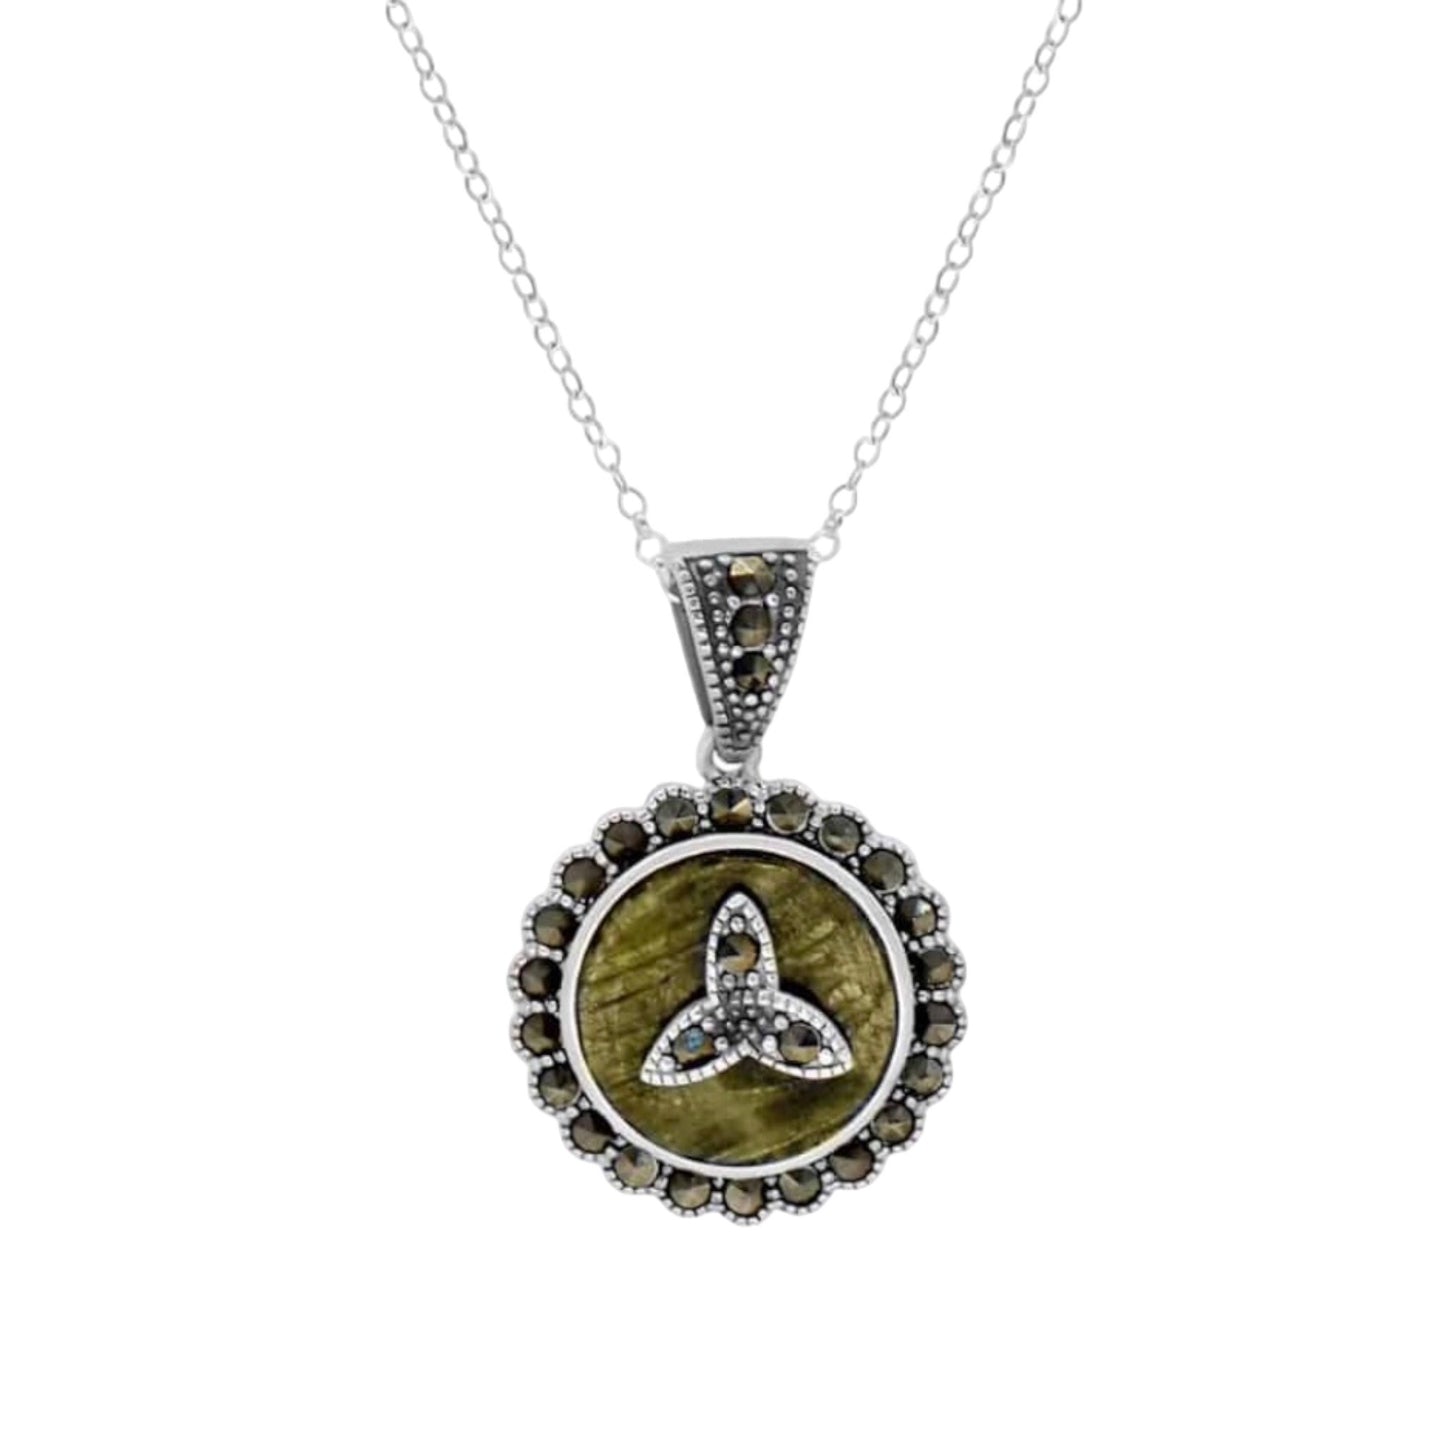 Connemara Jewelry Marcasite With Connemara Marble Trinity Knot Silver Pendant